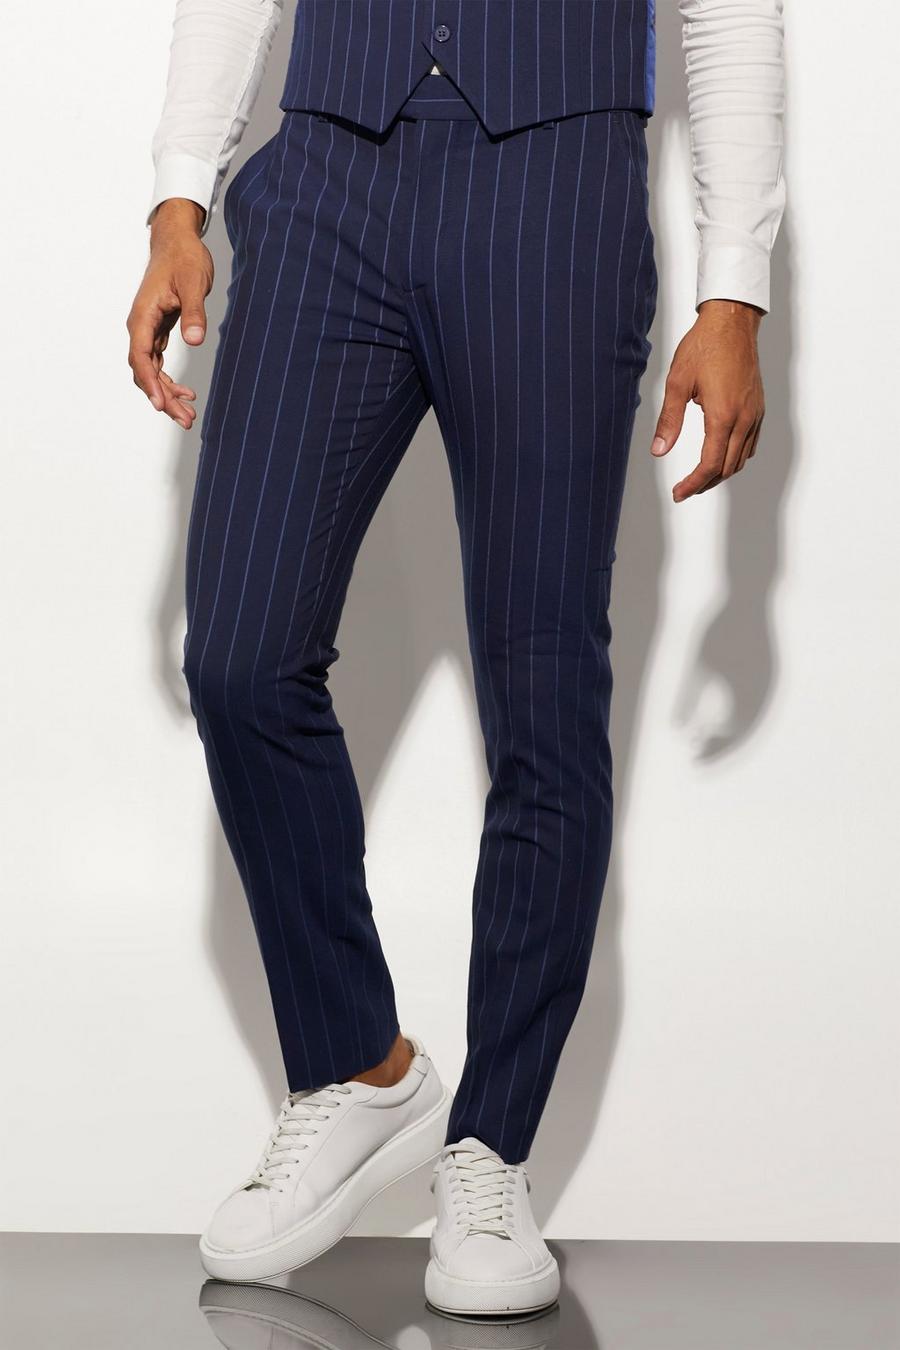 Pantaloni completo Skinny Fit blu navy a righe verticali, Blu oltremare